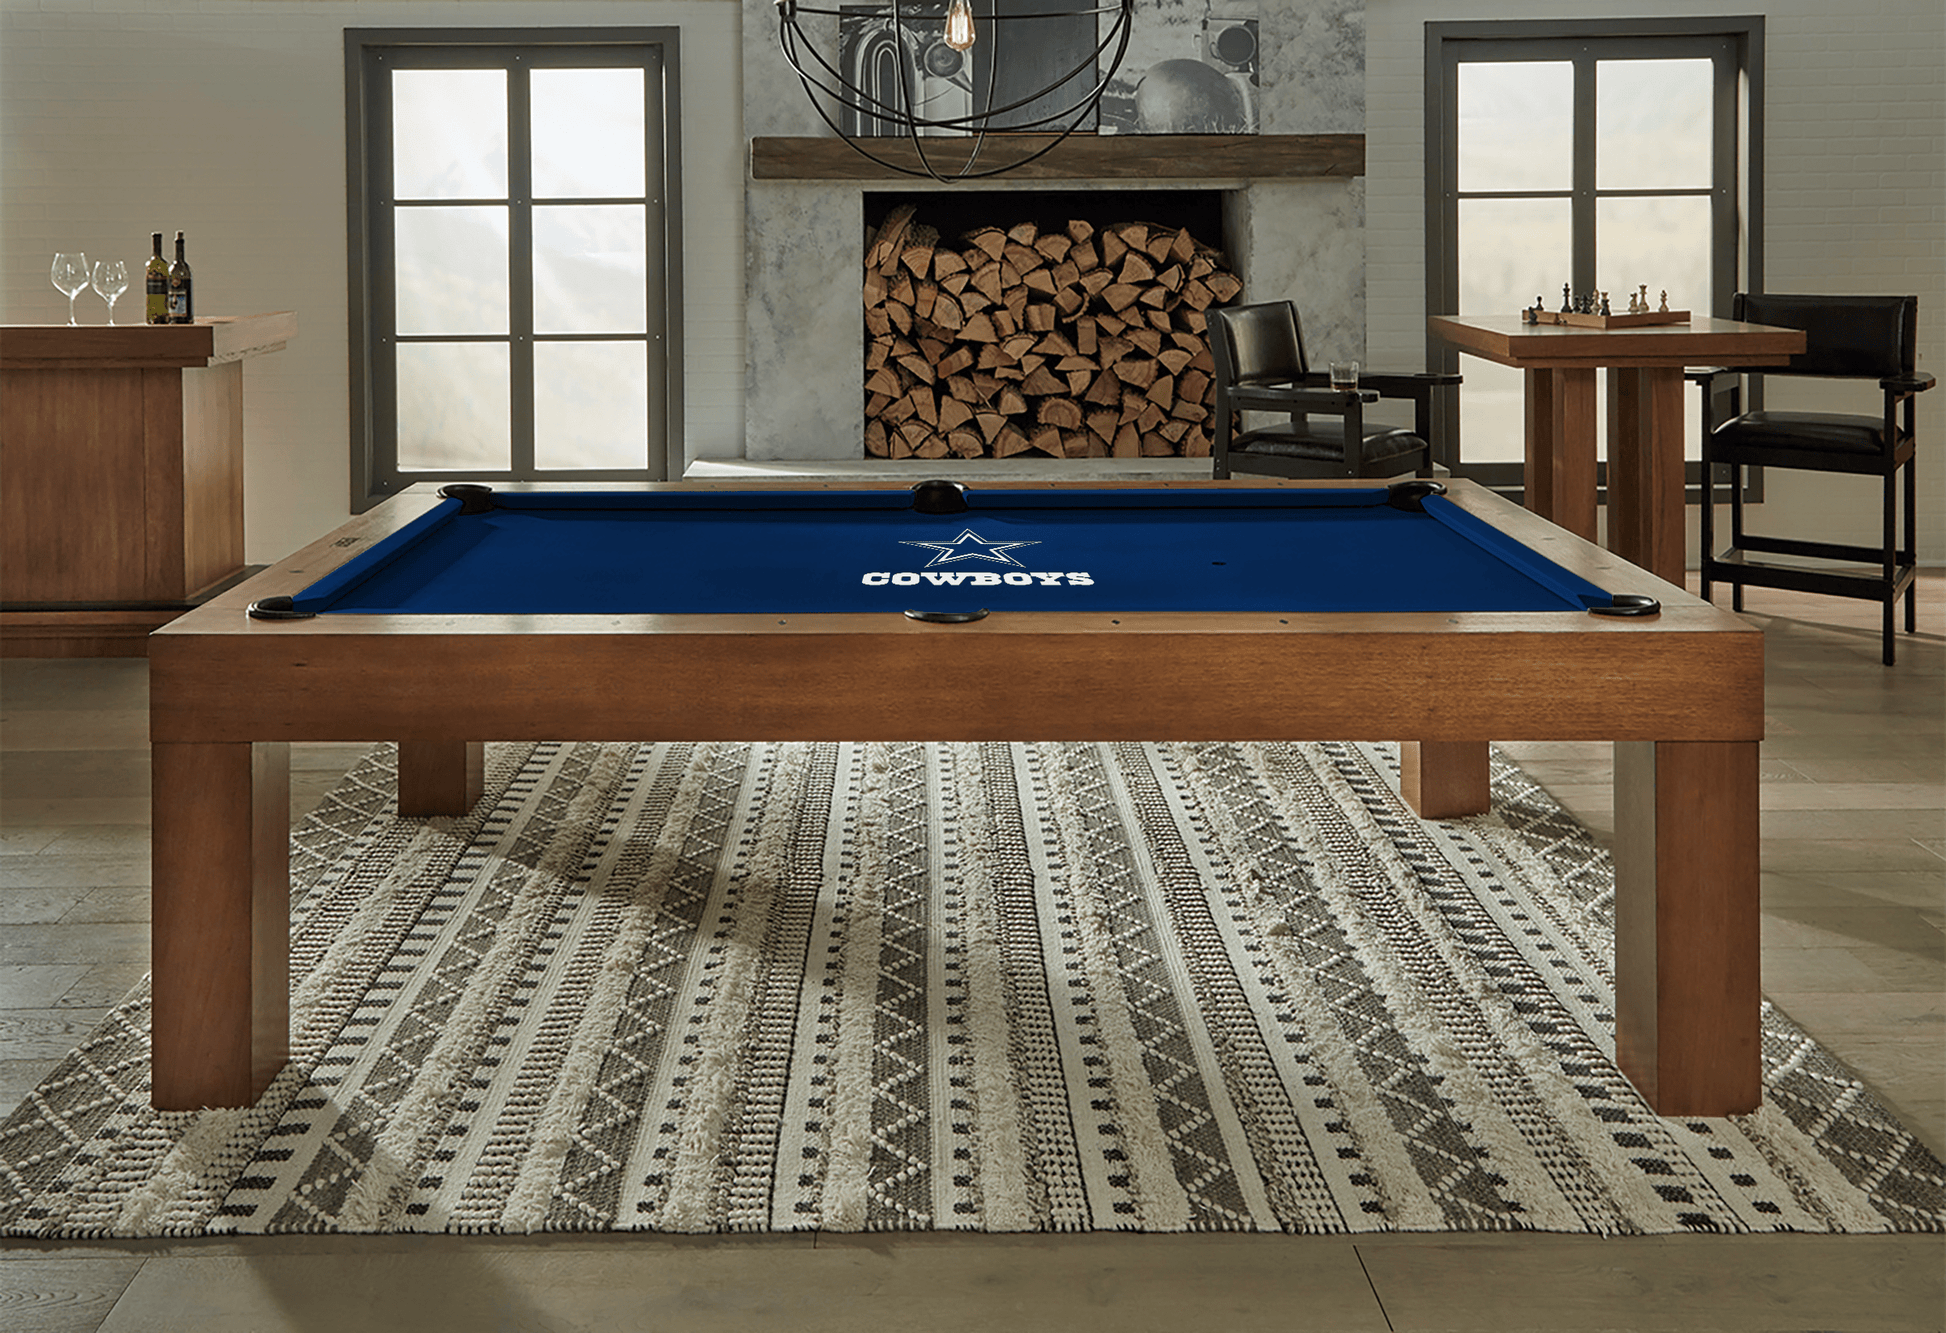 Dallas Cowboys Premium Pool Table Bundle - Charcoal Pool Bundle Home Arcade Games   